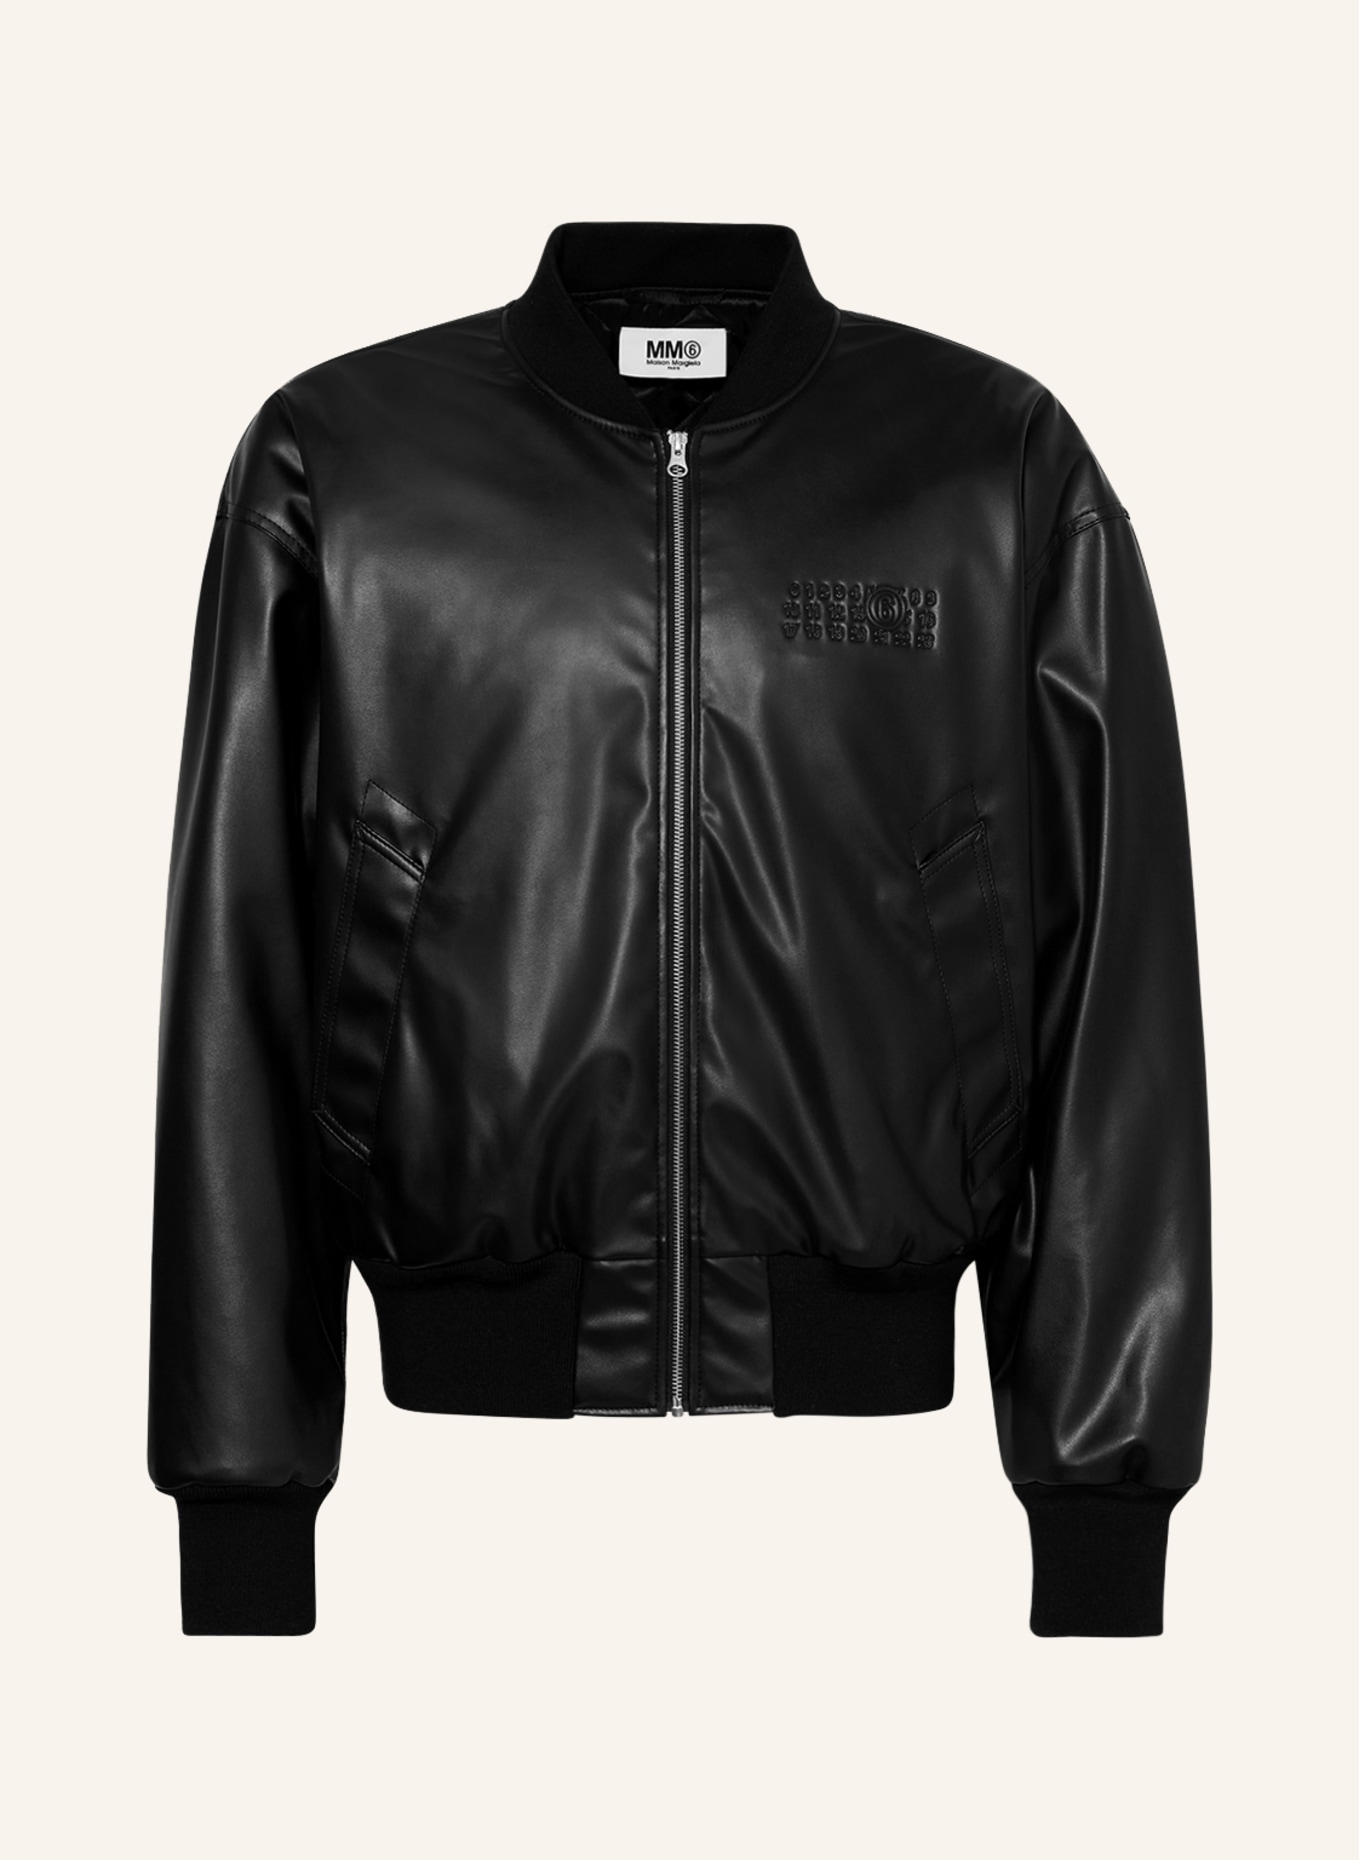 MM6 Maison Margiela Bomber jacket in leather look, Color: BLACK (Image 1)